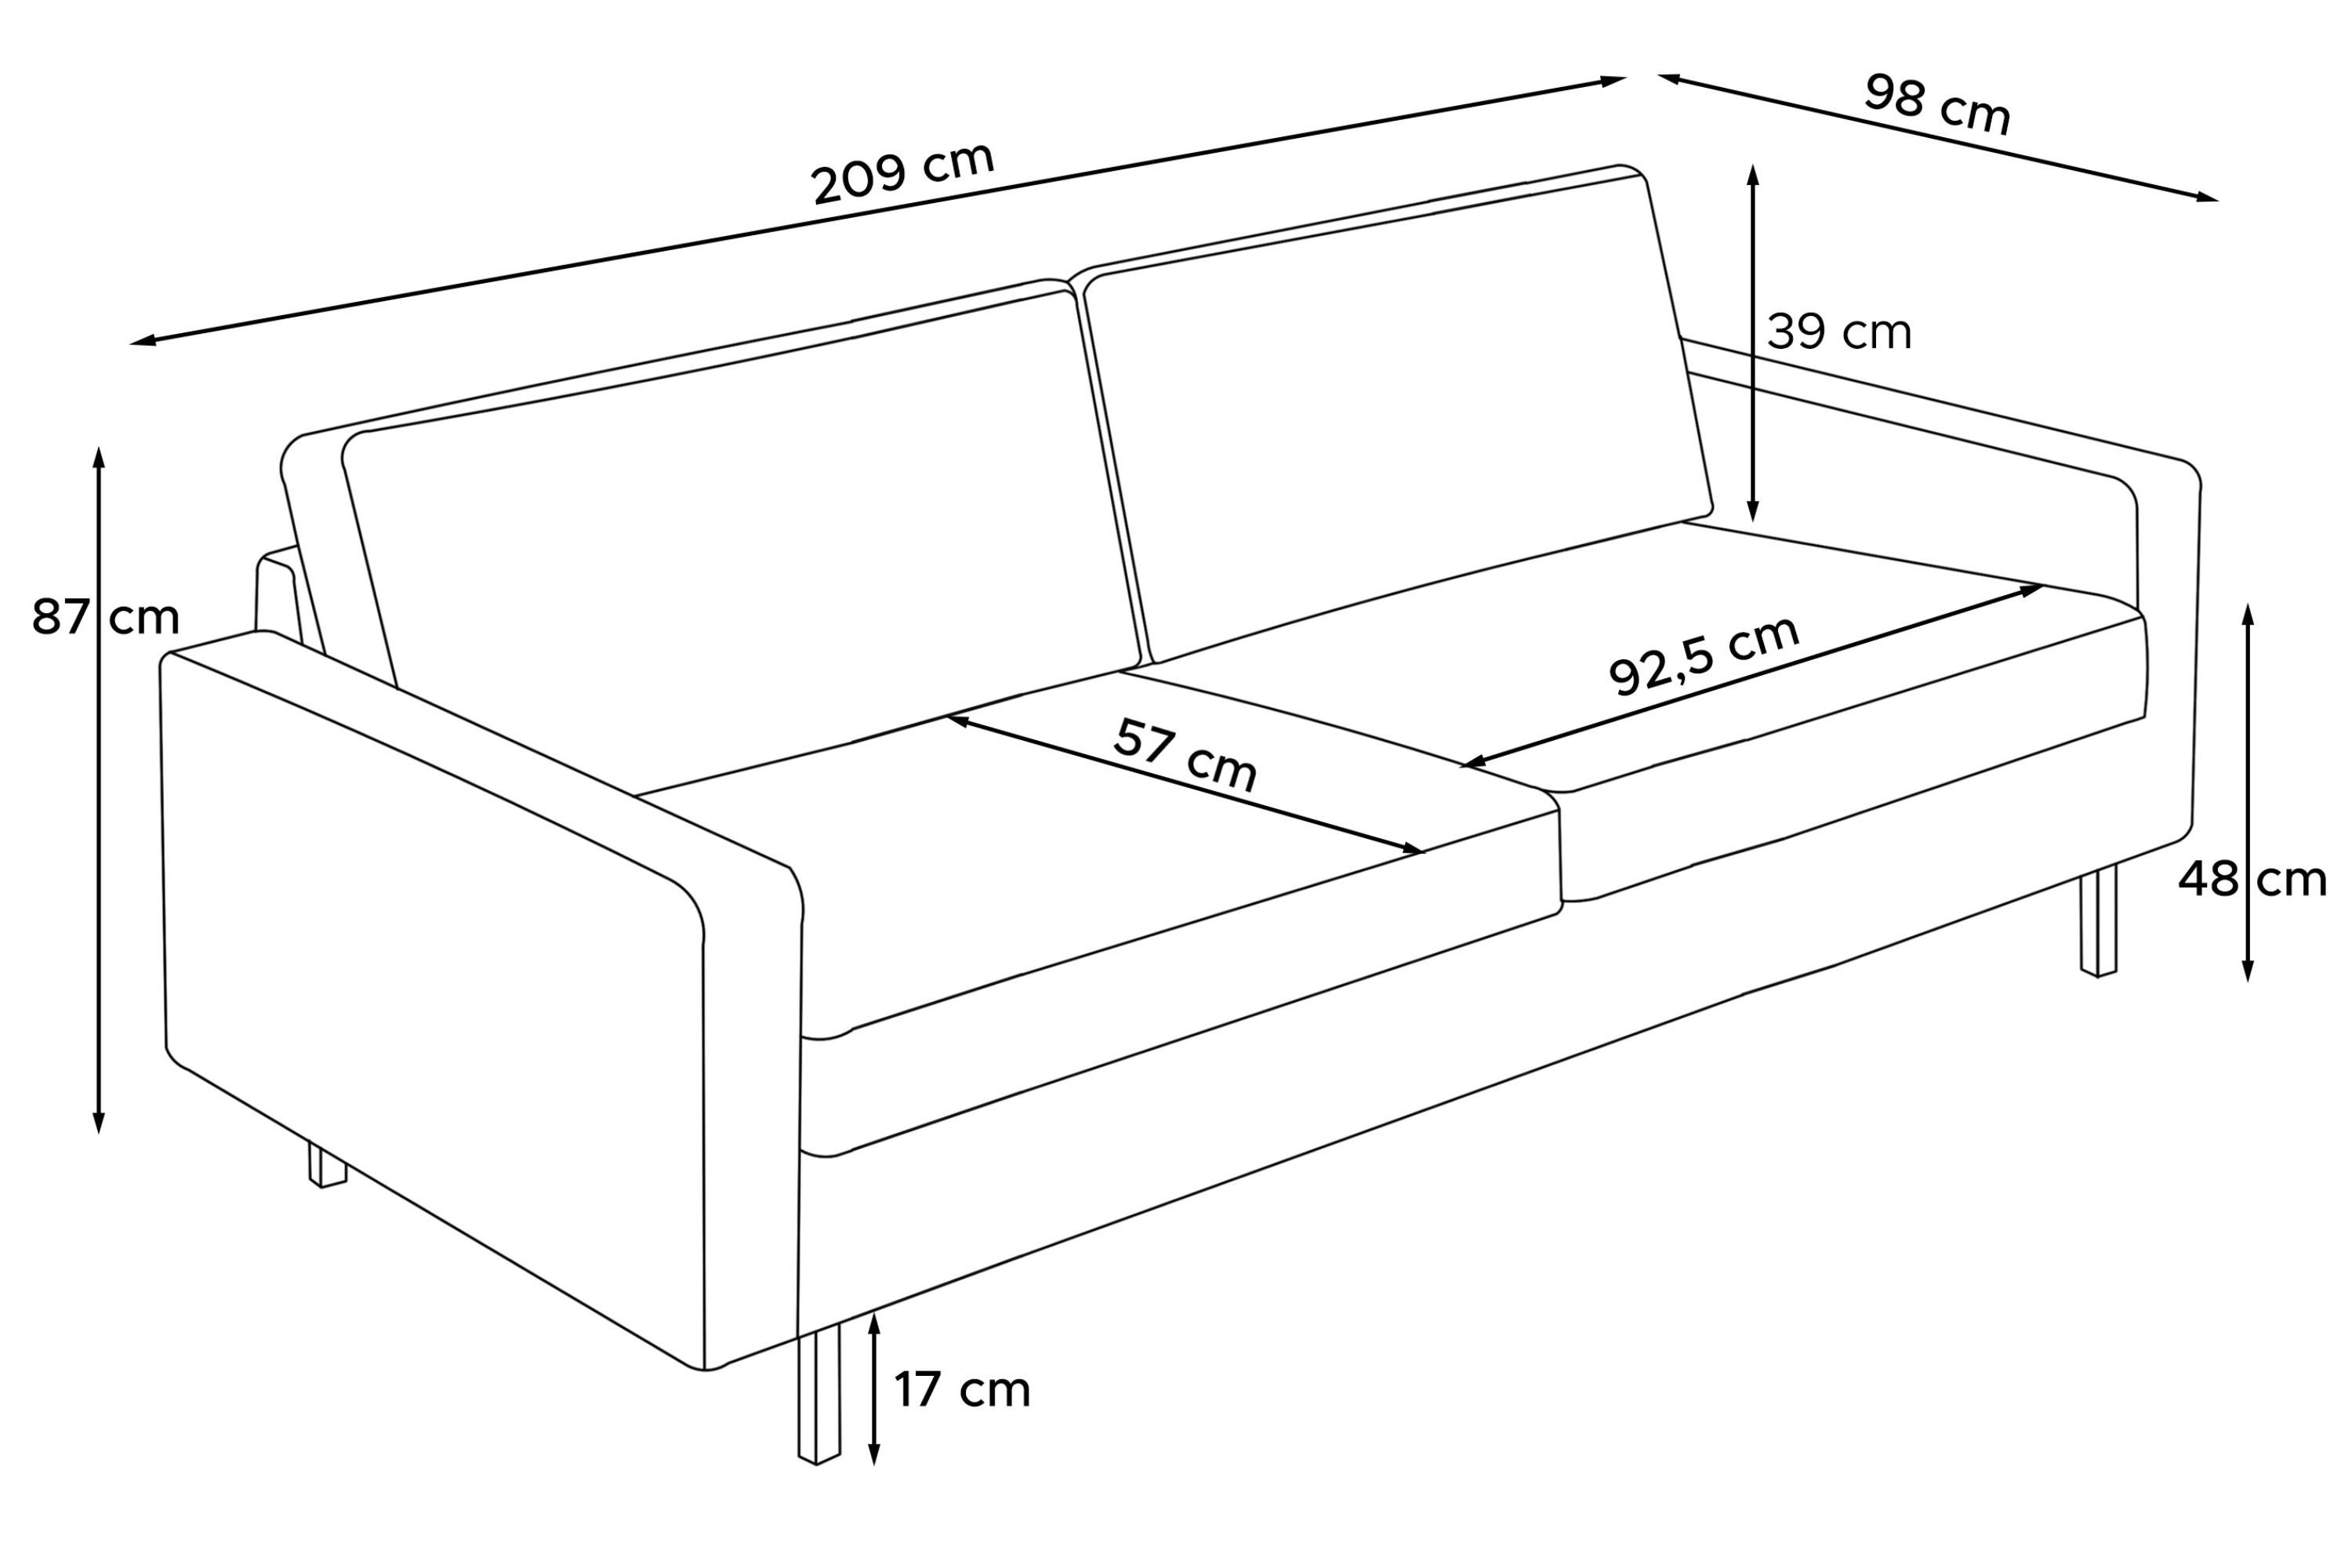 Konsimo 3-Sitzer INVIA Dreisitzer-Sofa, Grundschicht: | dunkelgrau in EU auf dunkelgrau Echtleder, Metallfüßen, hohen Hergestellt dunkelgrau 